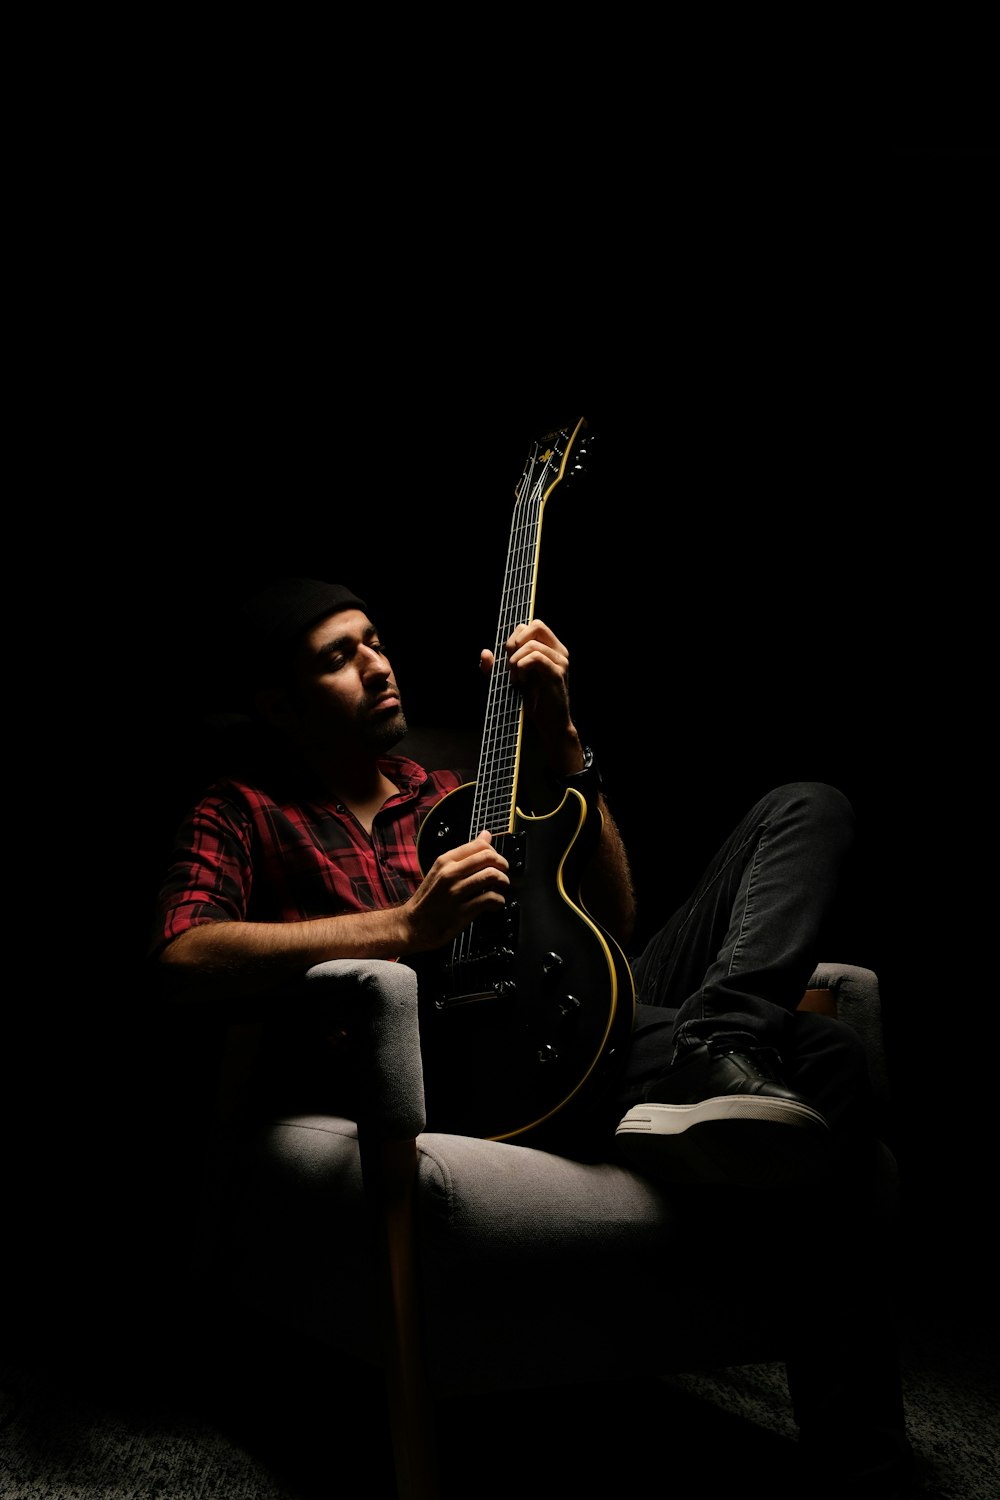 a man playing a guitar